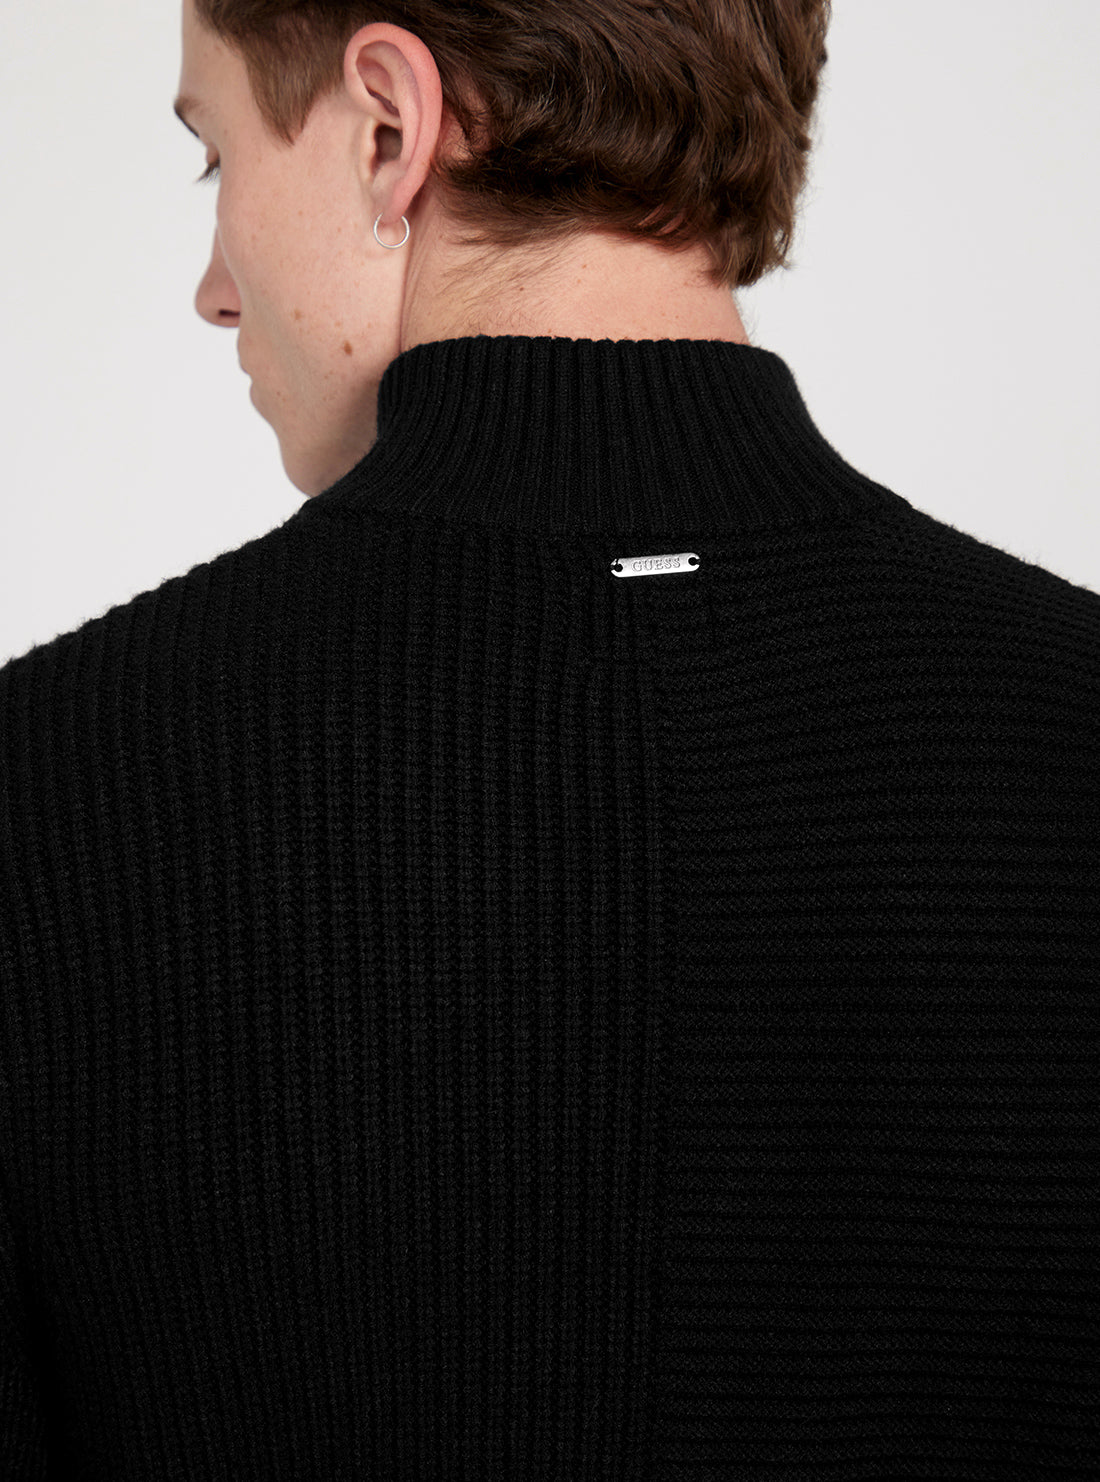 GUESS Black Carmen Long Sleeve Mock Neck Sweater detail view